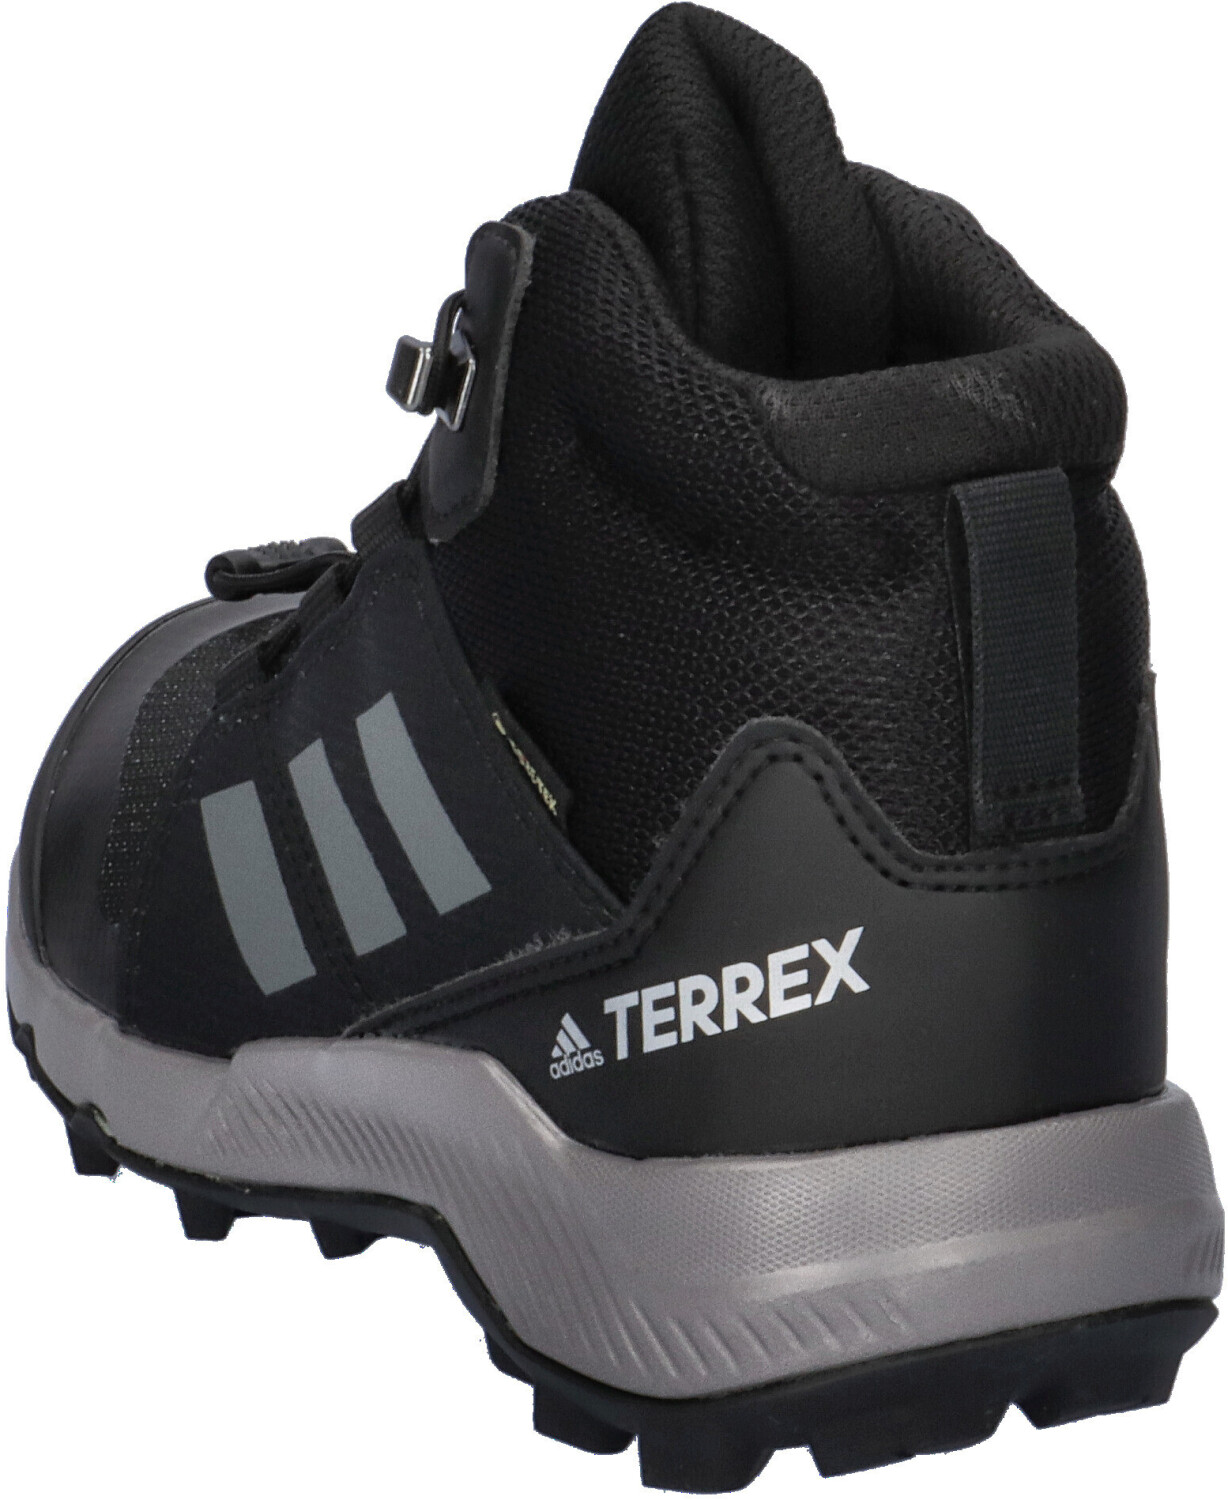 Buy Adidas Terrex Mid GTX K core black/grey three/core black from £44. ...